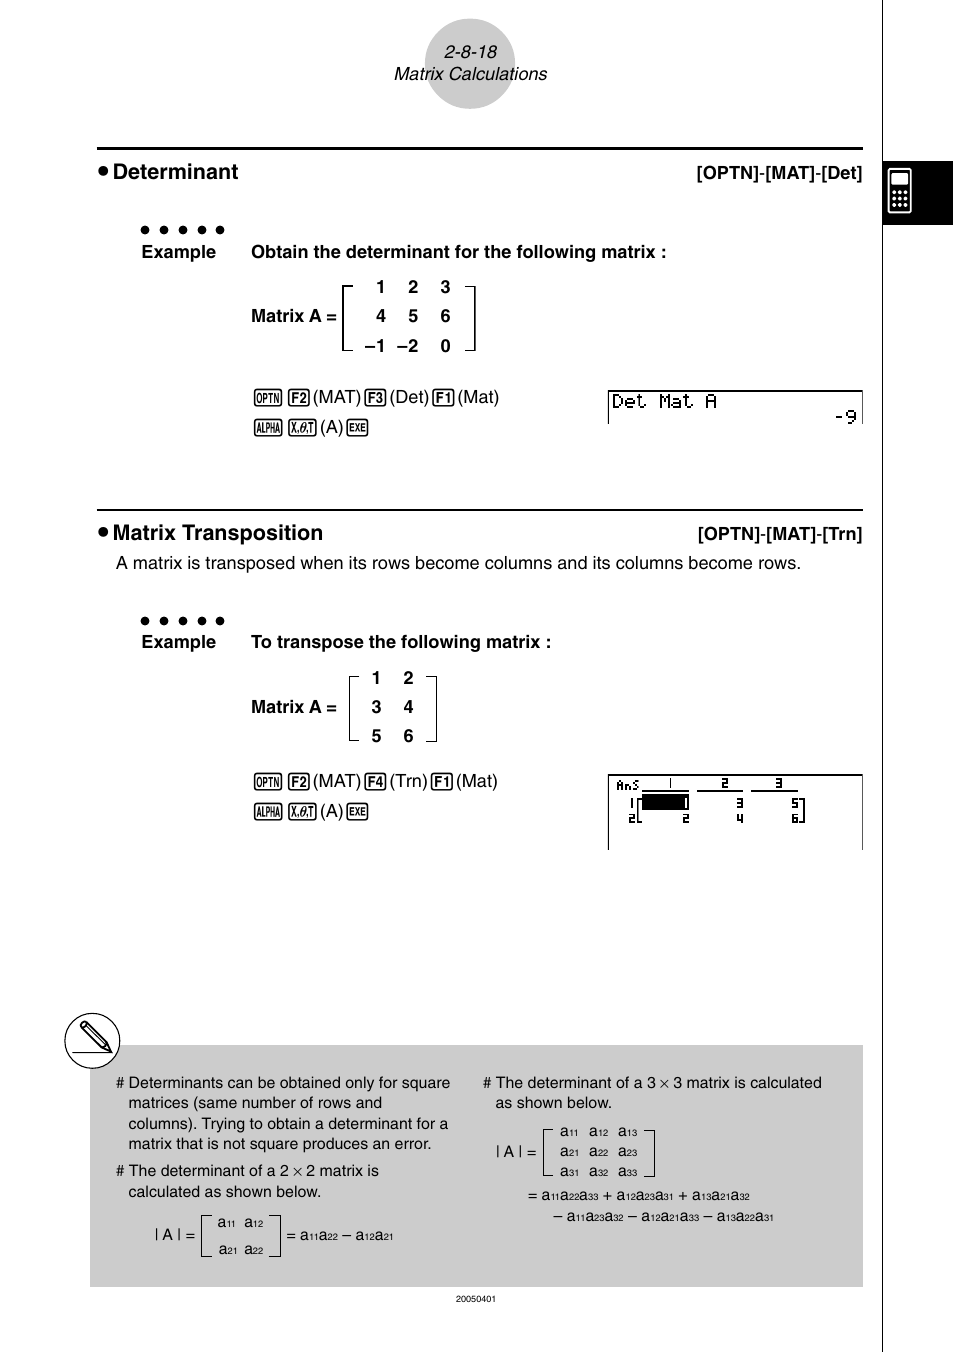 Determinant, Matrix transposition, Optn] - [mat] - [det | Casio fx-9860G SD  User Manual | Page 135 / 596 | Original mode